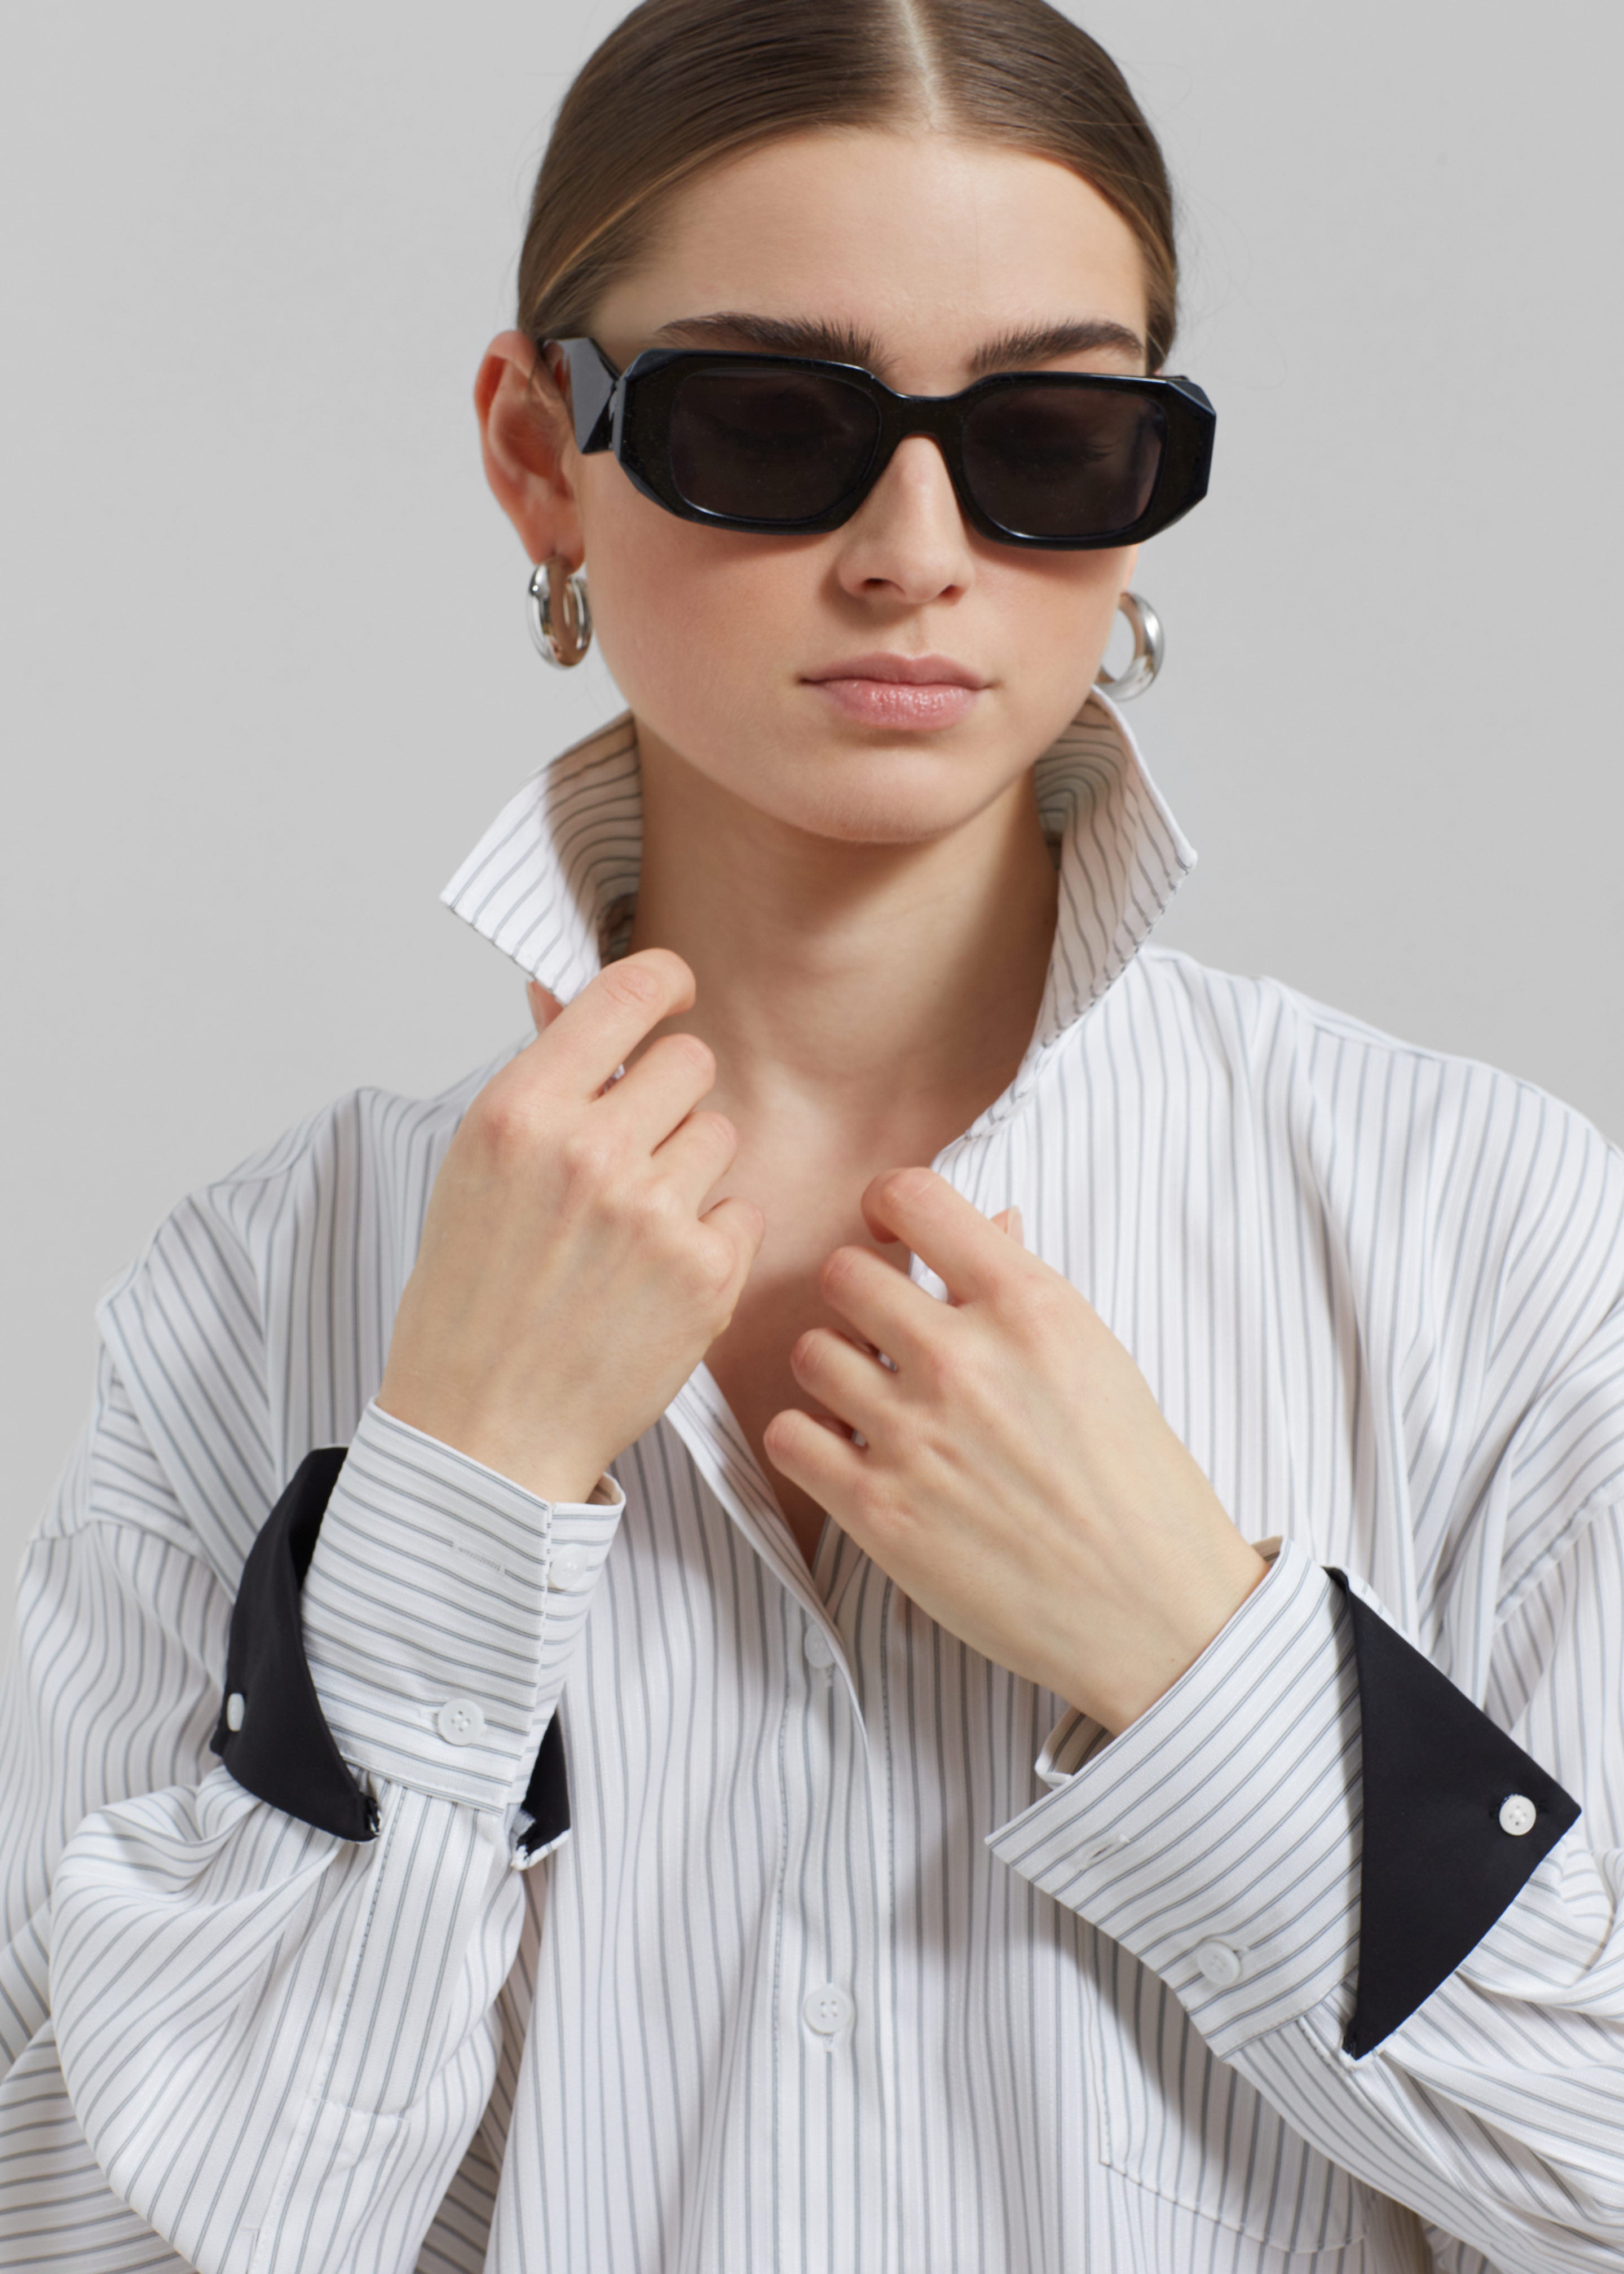 Leona Button Up Shirt - White/Grey Stripe - 2